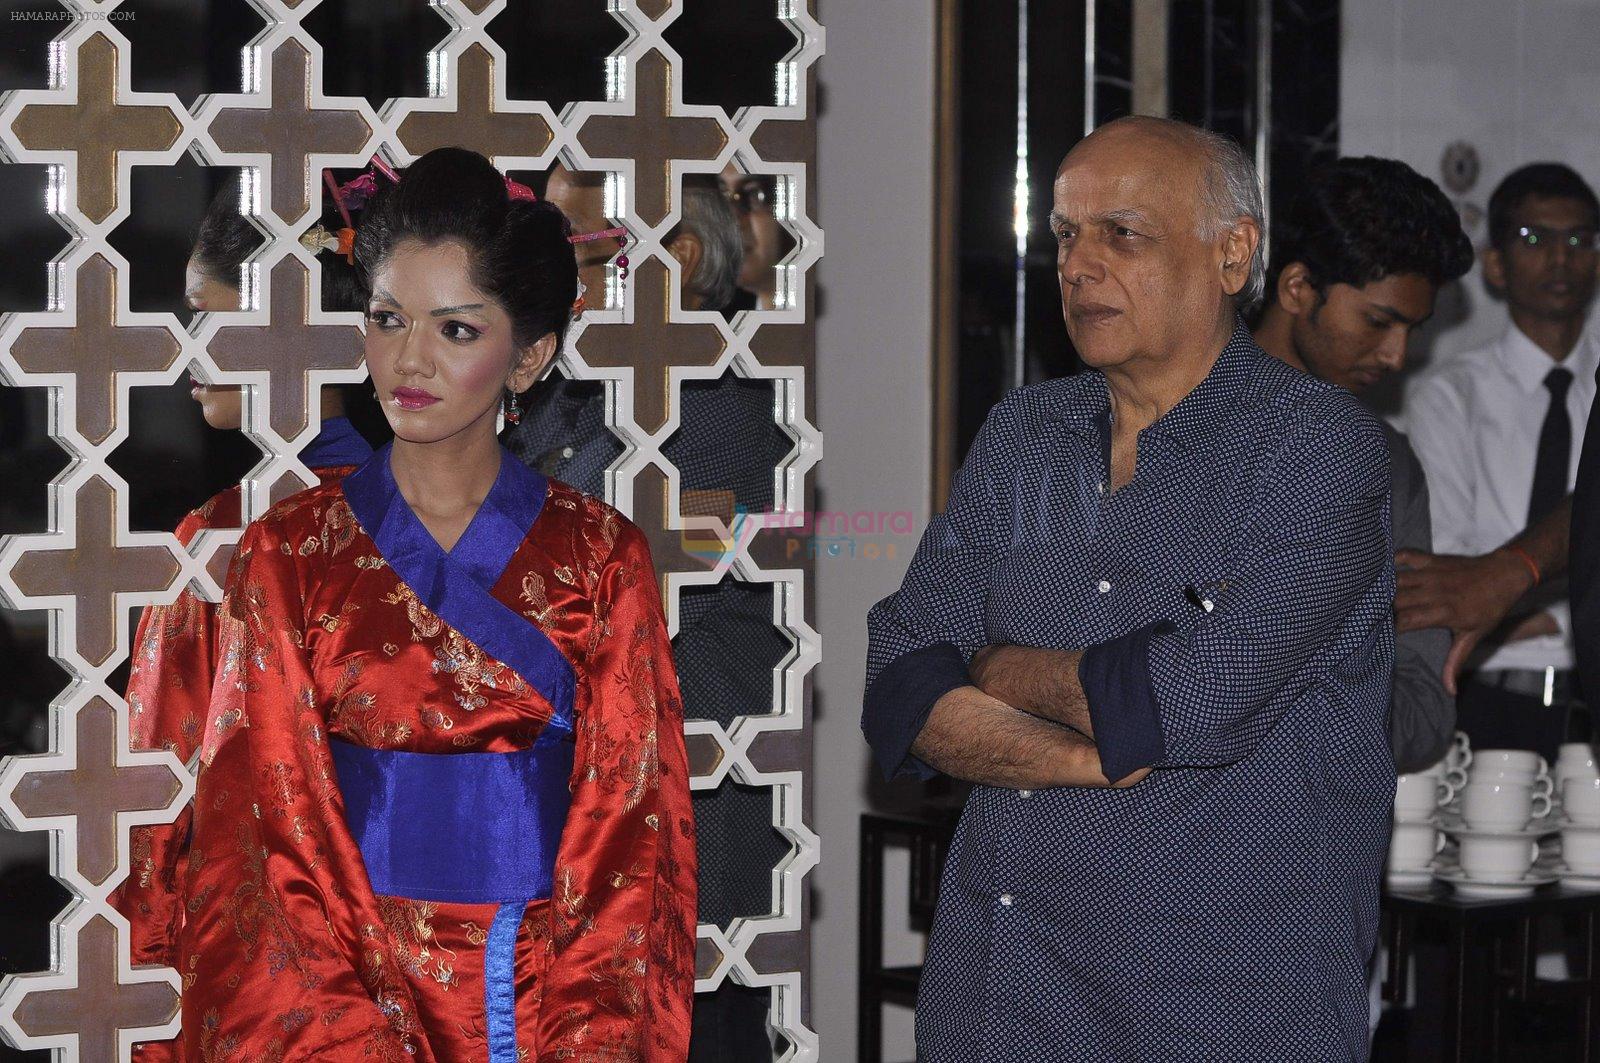 Mahesh Bhatt at Japan film festival meet in Palladium, Mumbai on 2nd Dec 2014